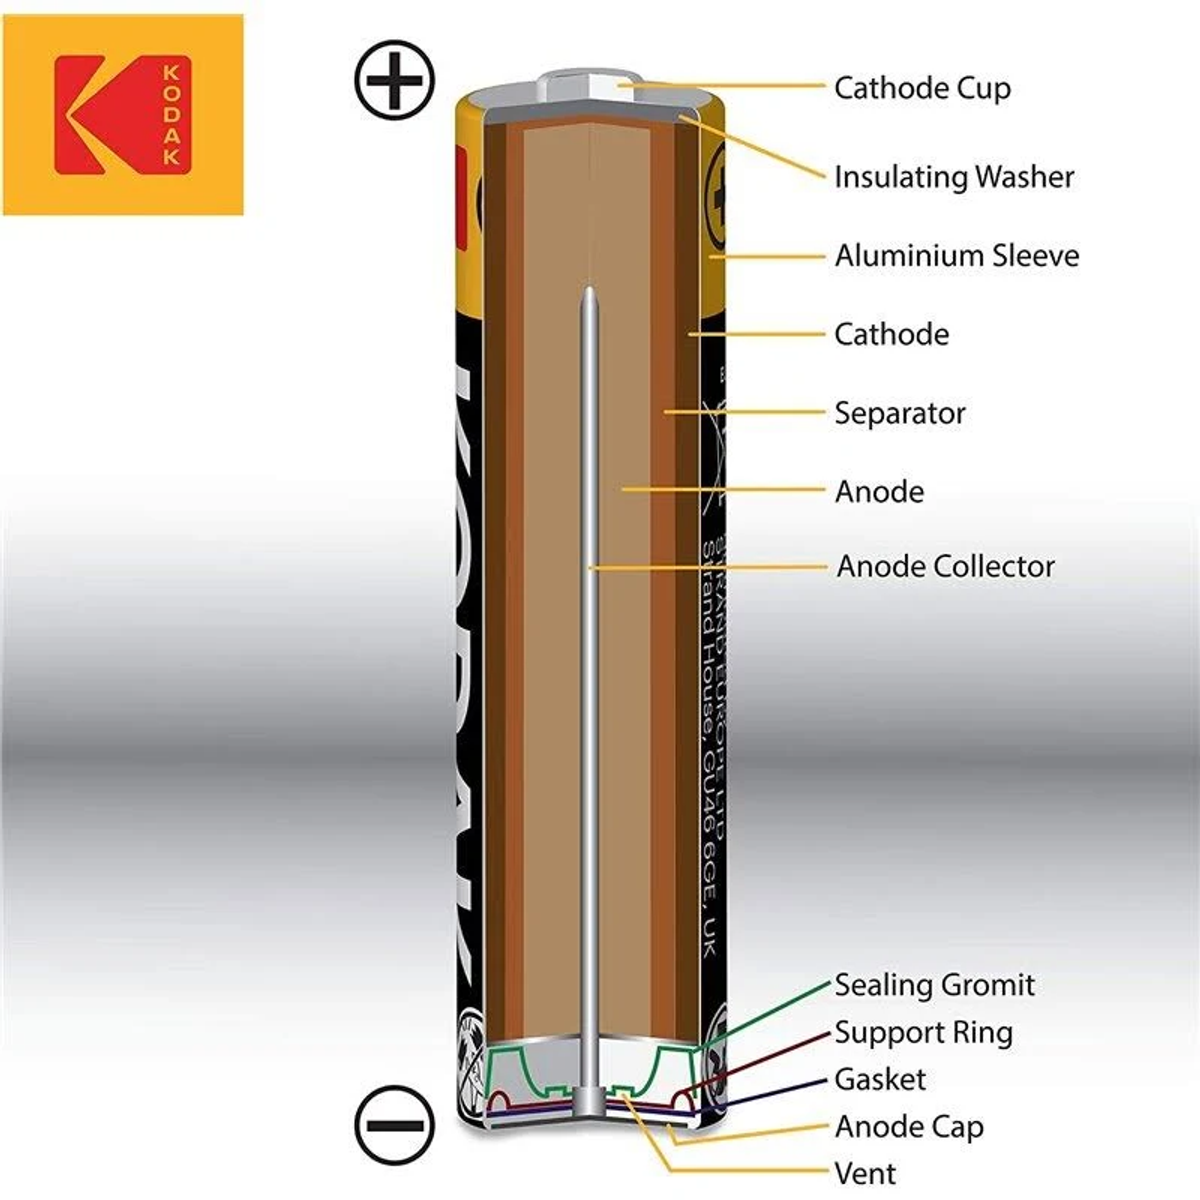 KODAK 30422643 60 AAA Batterien Mehrzweckbatterien, (enthalten). Volt erforderlich 1.5